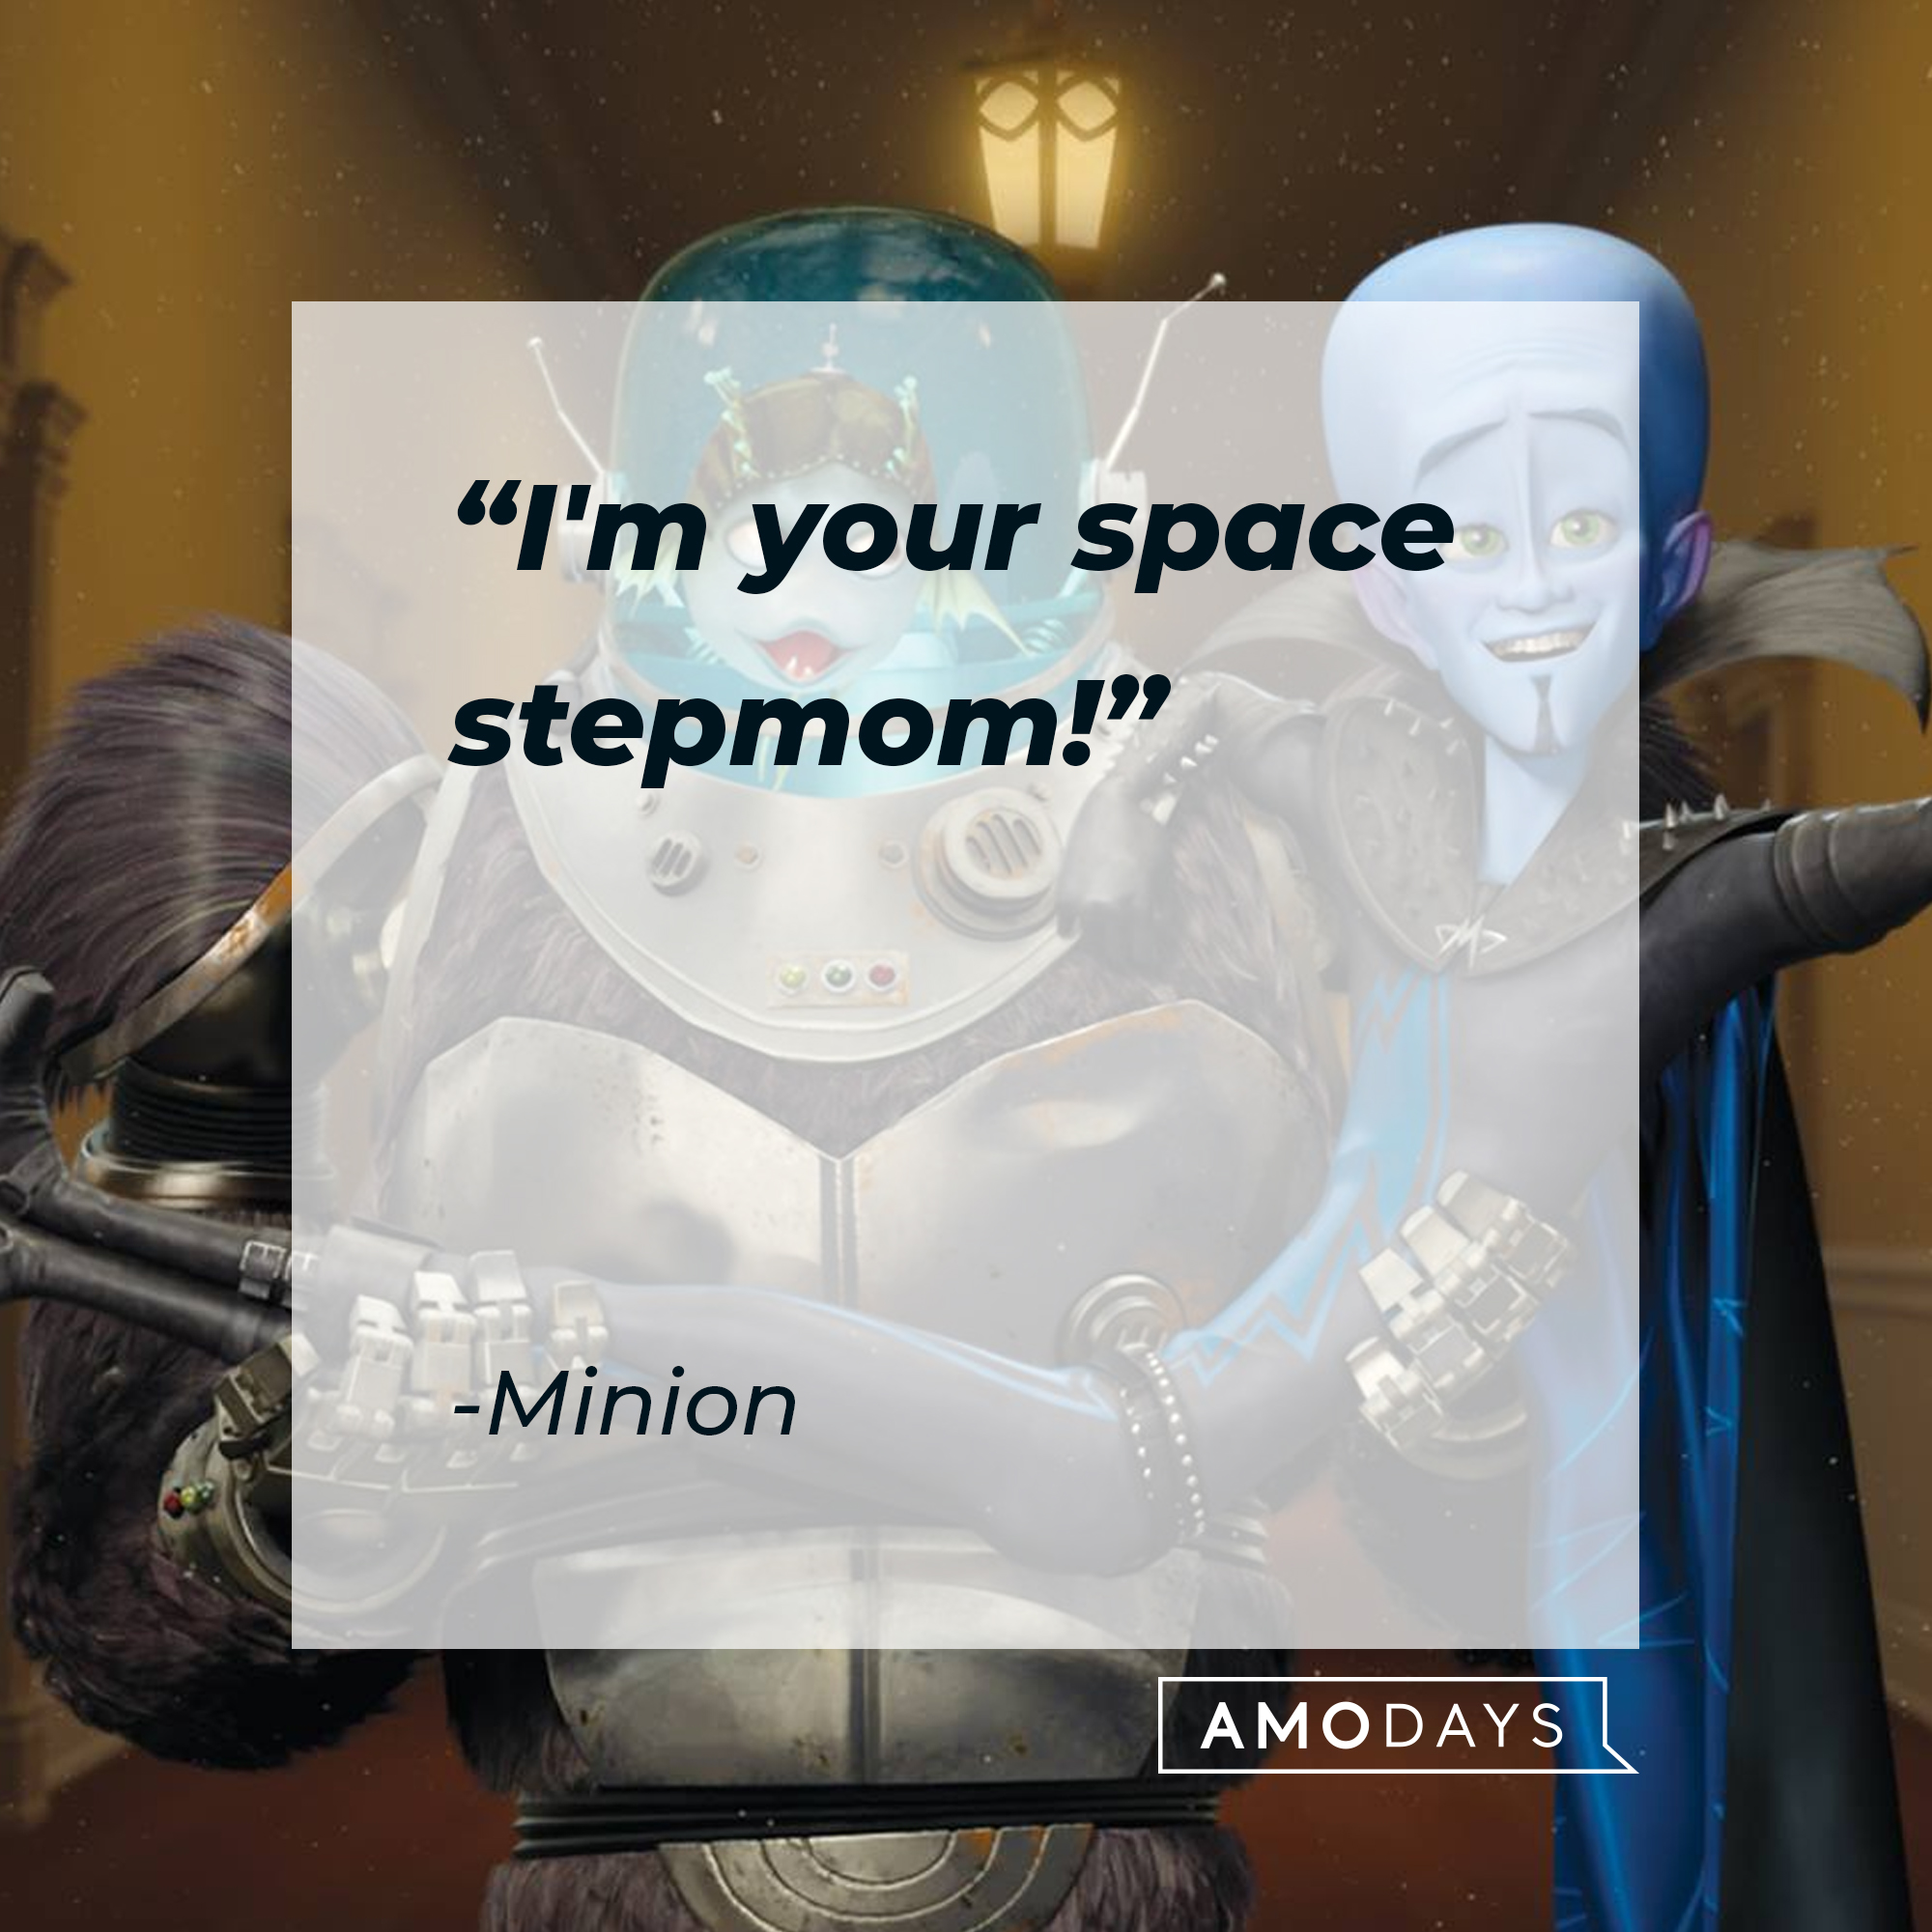 Minion's quote: "I'm your space stepmom!" | Source: Facebook.com/MegamindUK